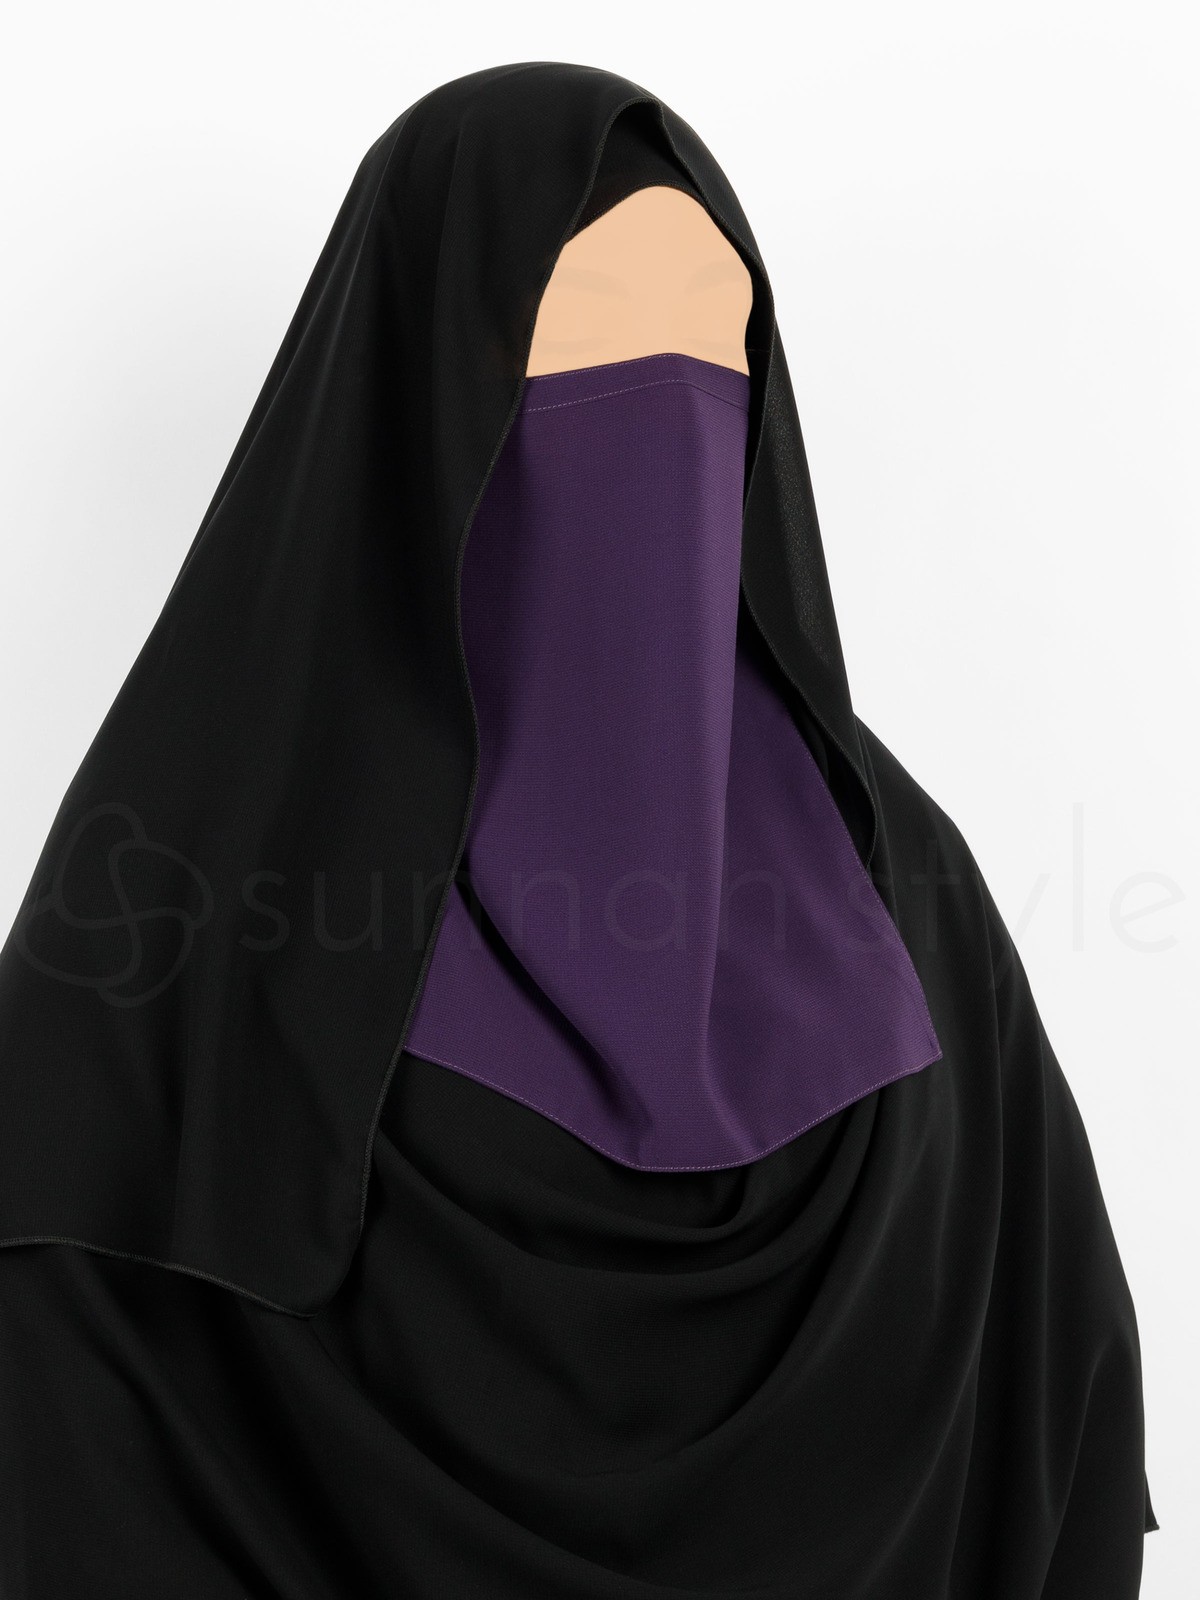 Sunnah Style - Tying Half Niqab (Violet)